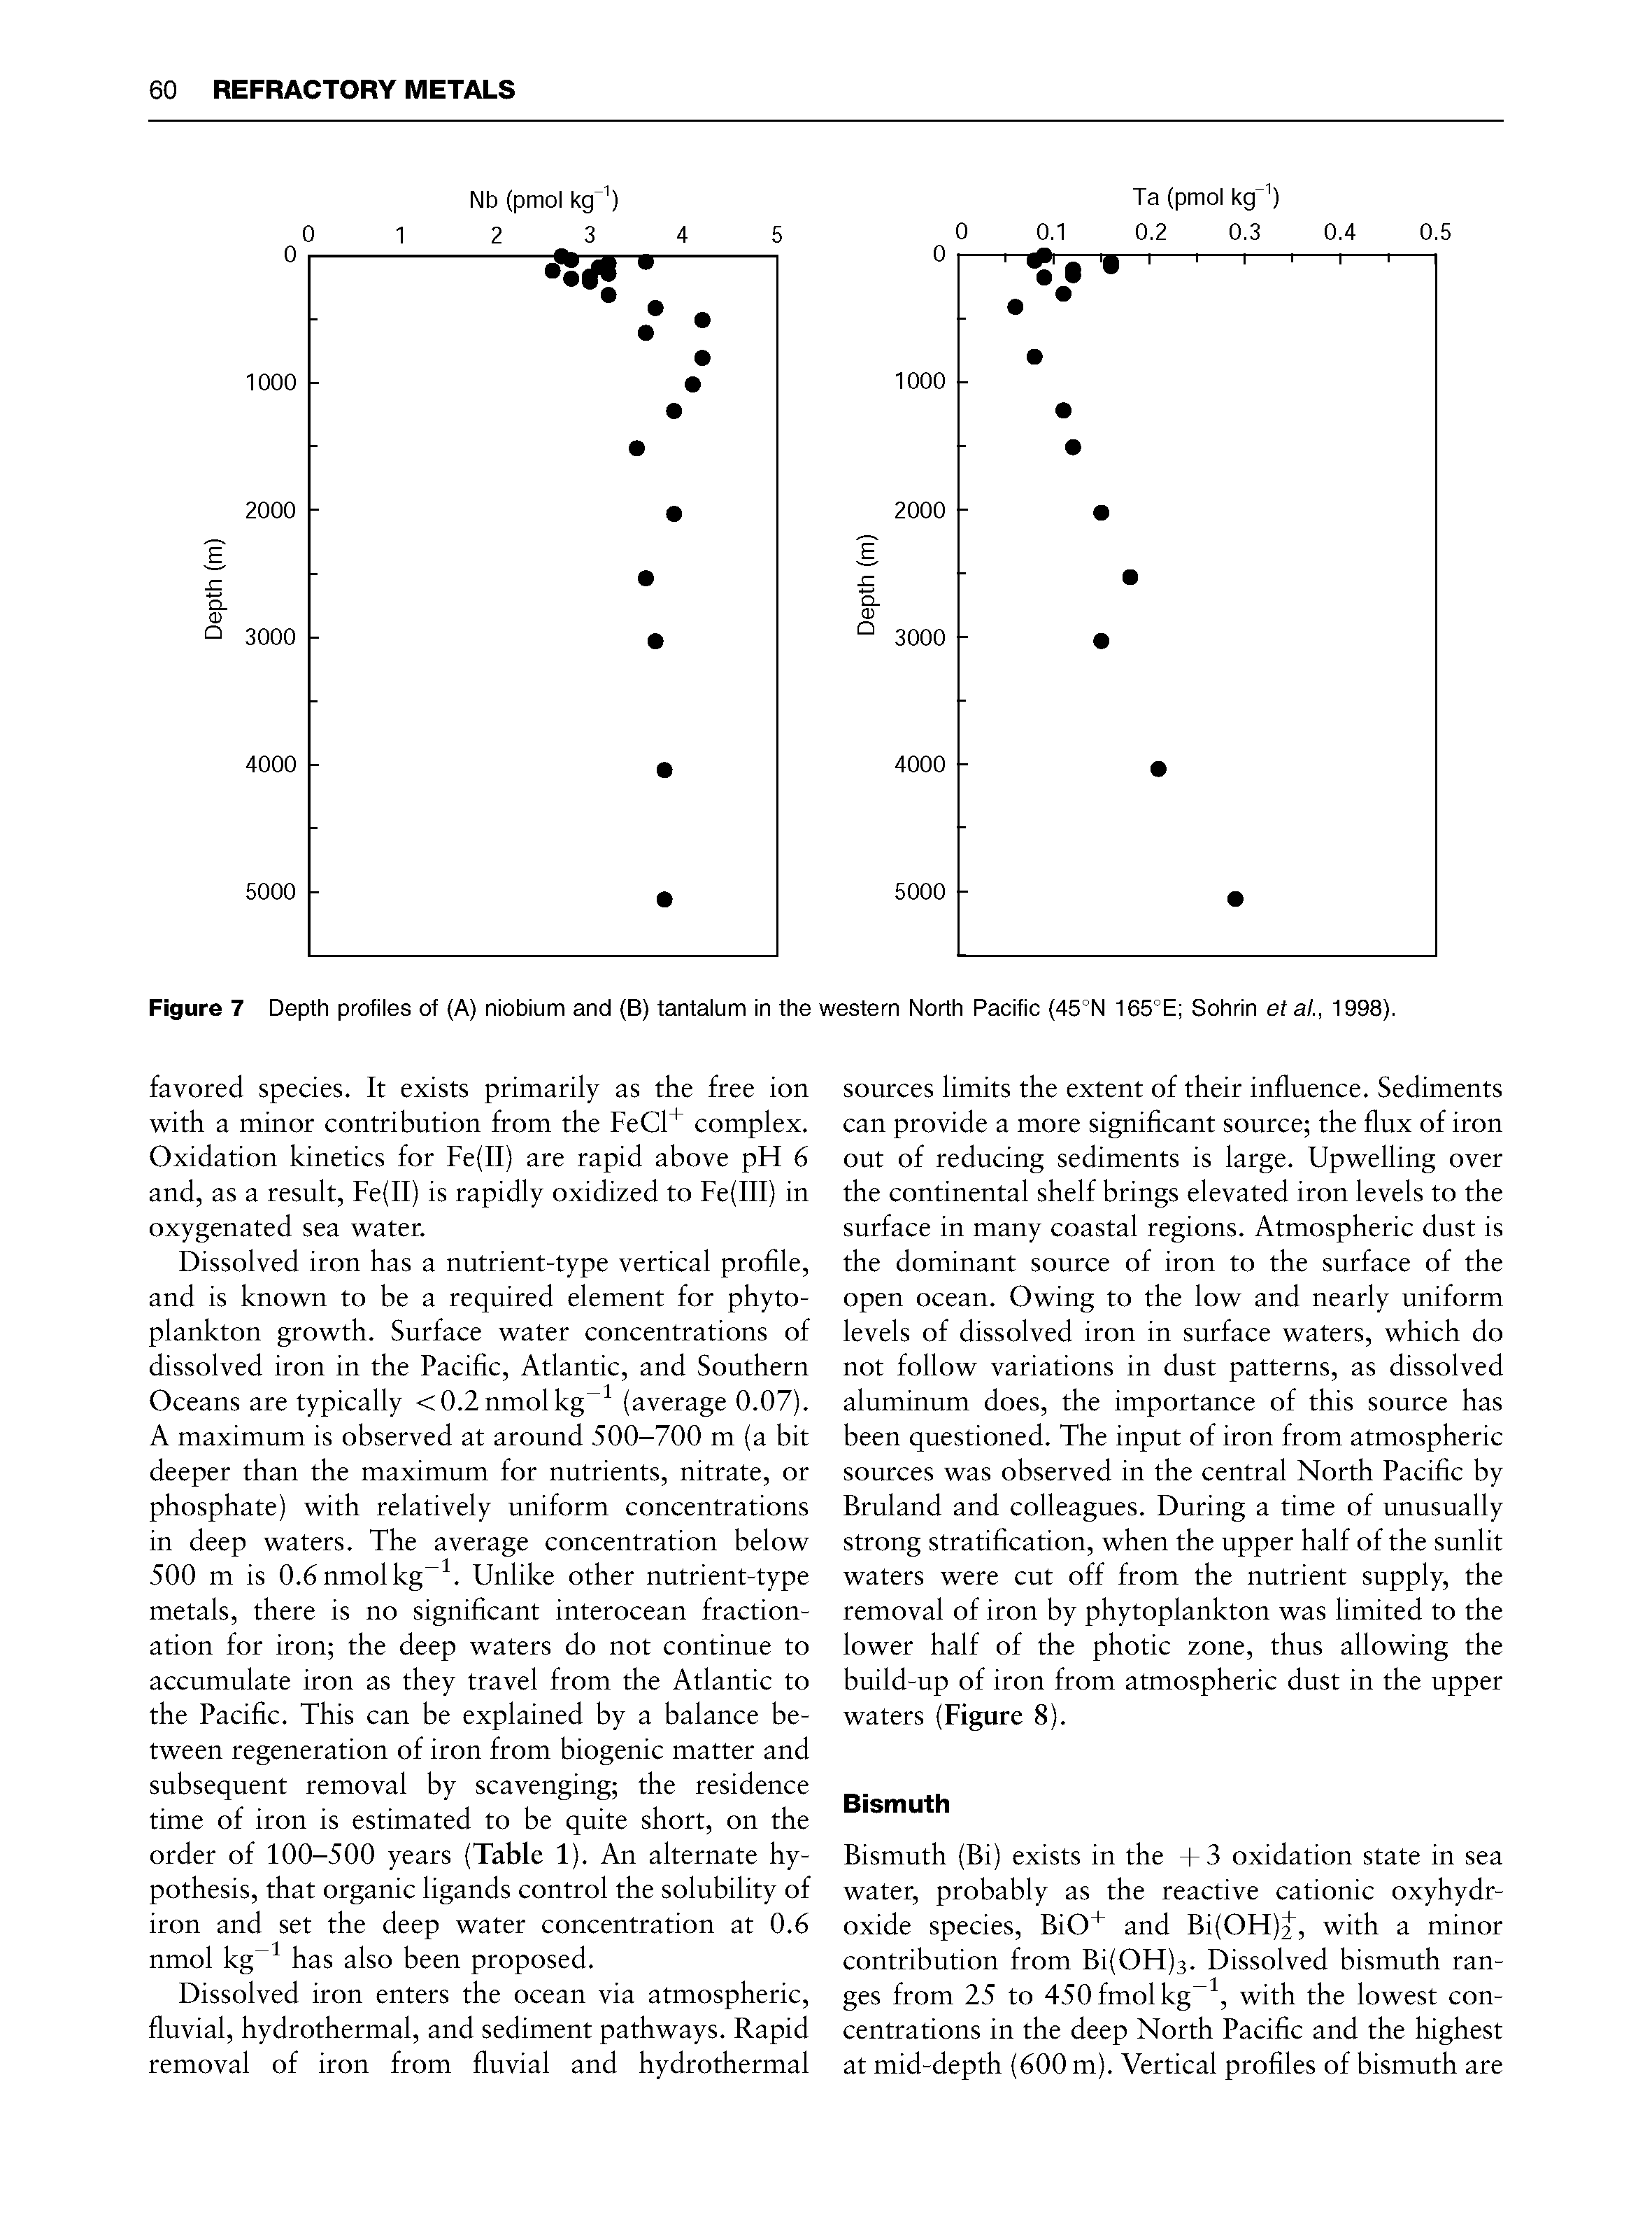 Figure 7 Depth profiles of (A) niobium and (B) tantalum in the western North Pacific (45°N 165°E Sohrin ef a/., 1998).